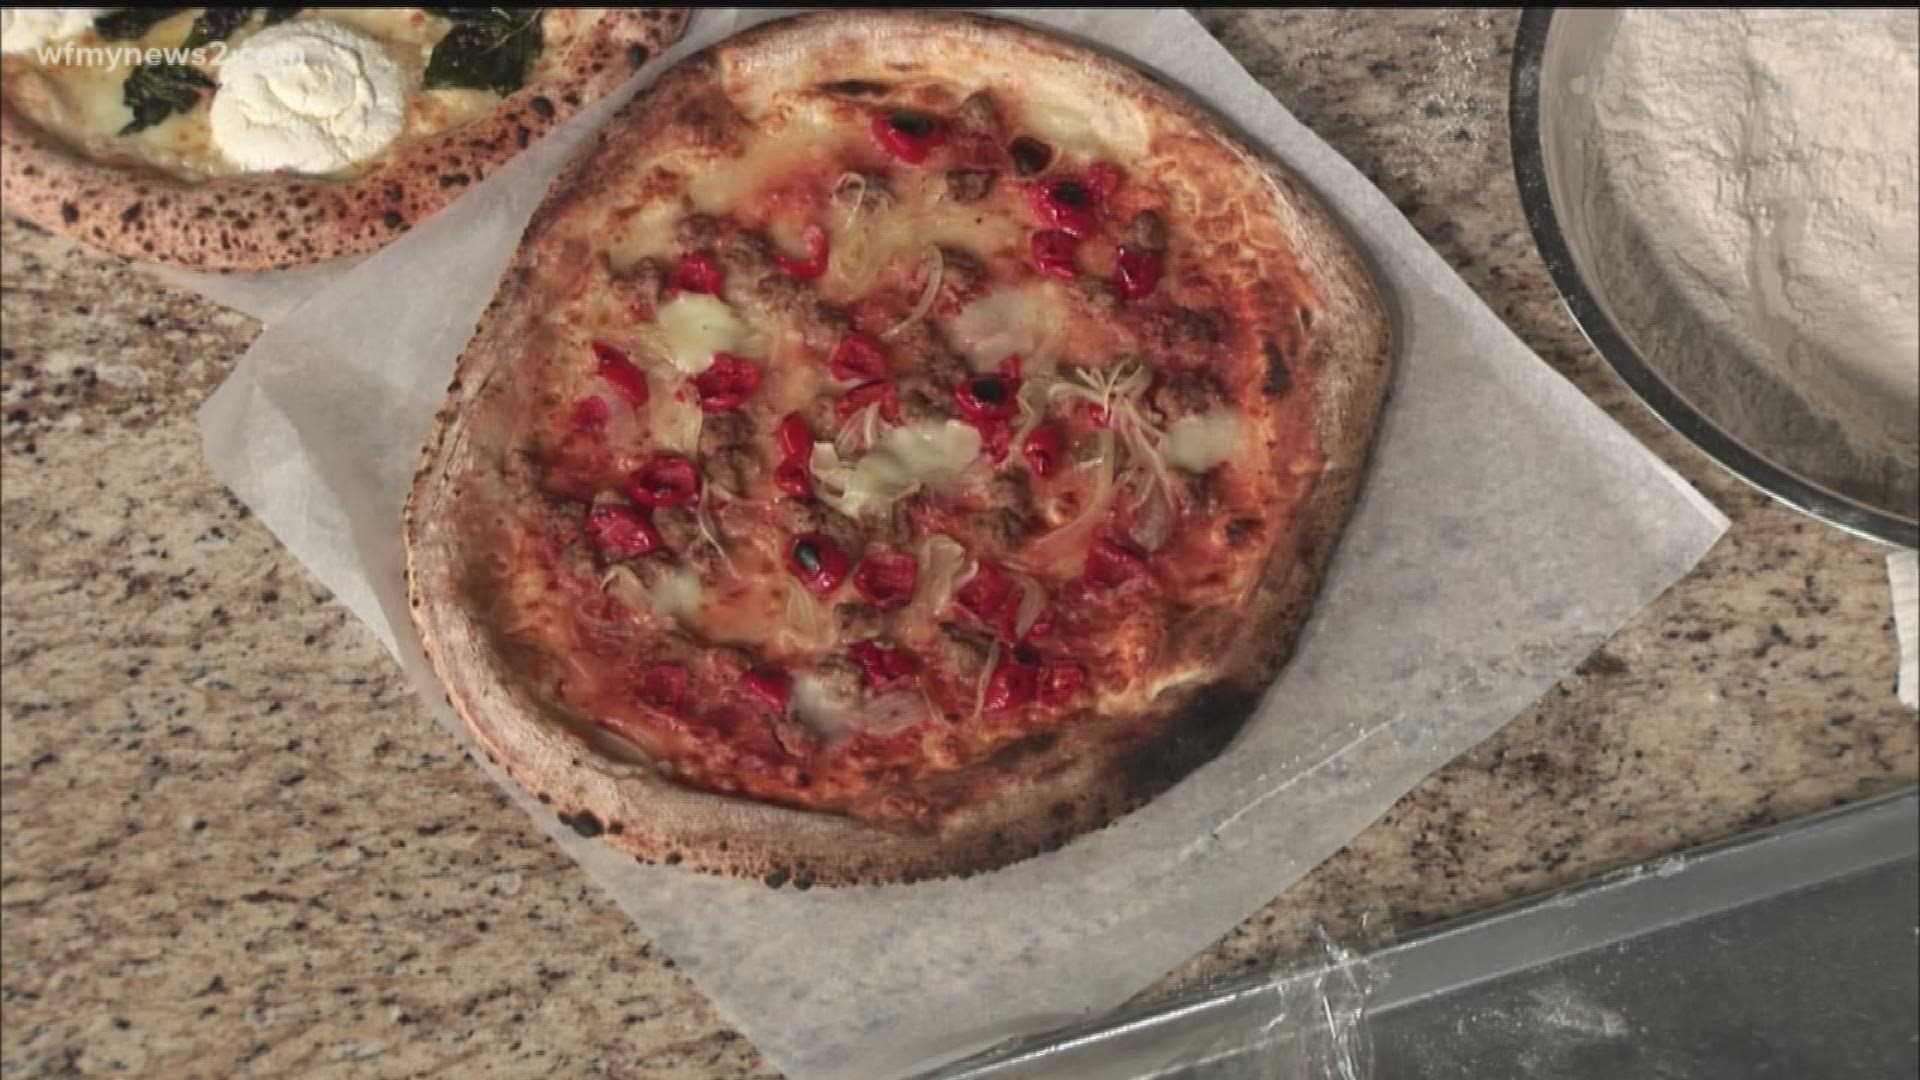 Cugino Forno shares their recipe for their Napoletana pizza.